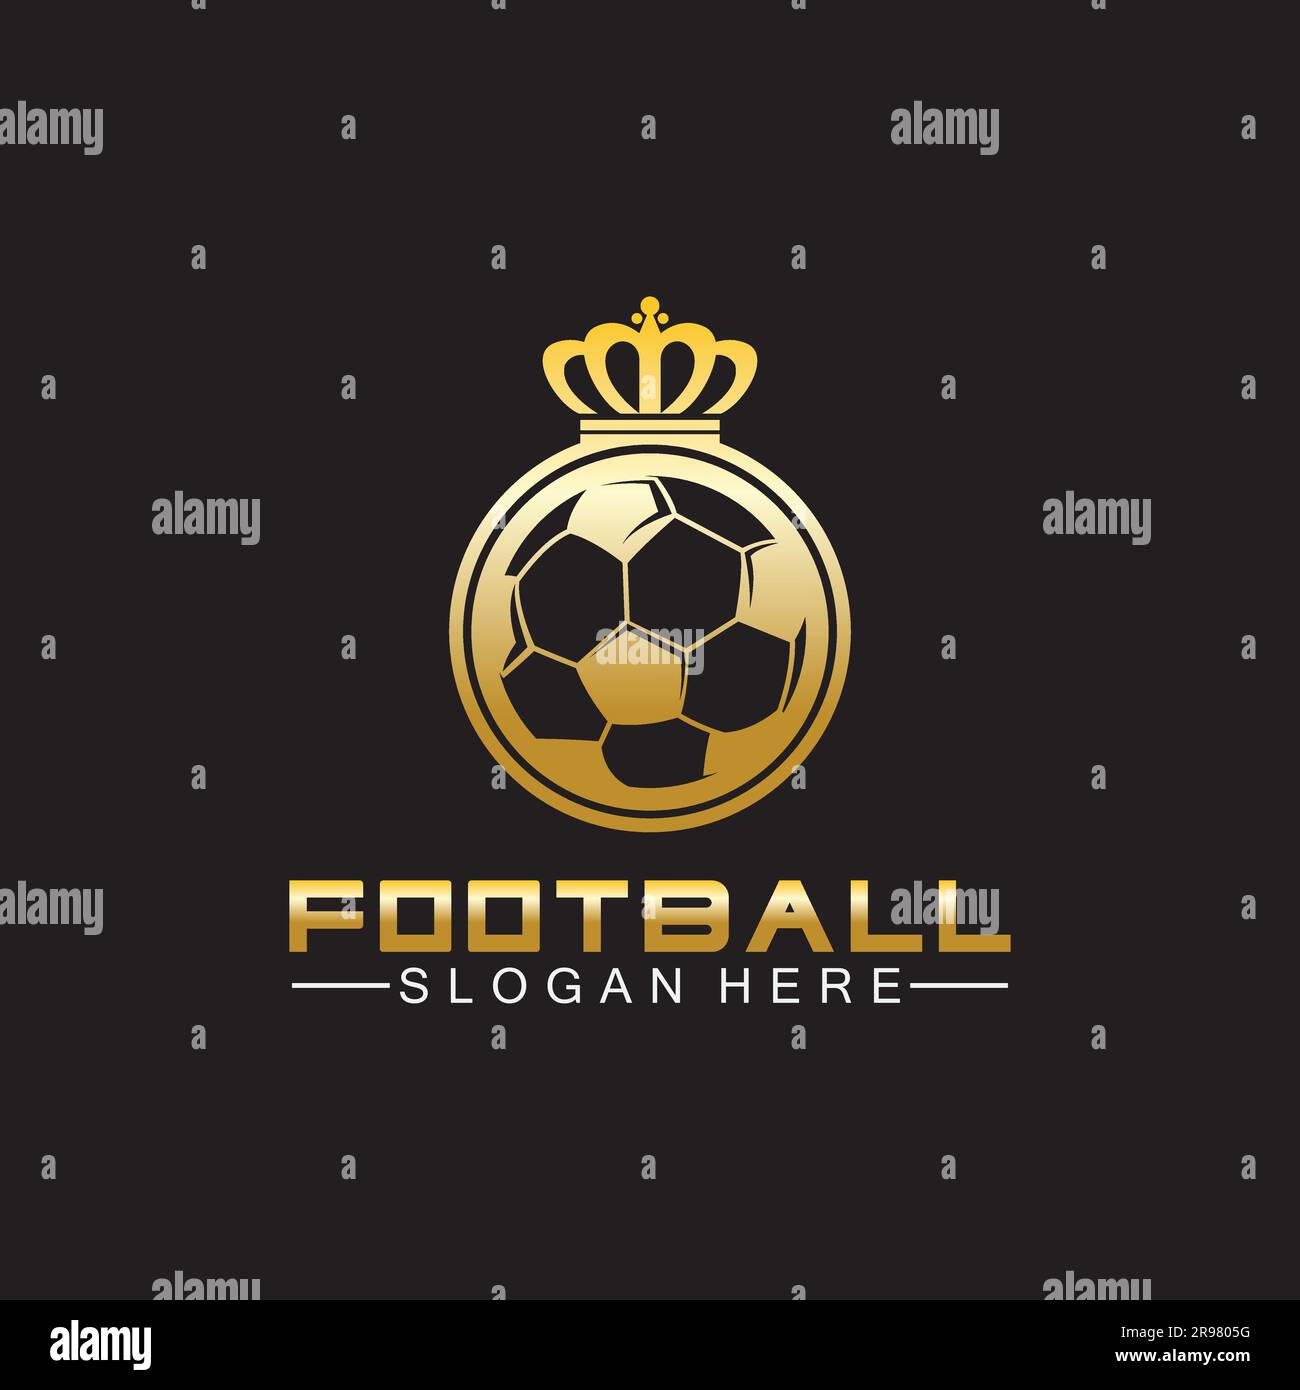 Luxury golden football king logo design on isolated black background ...